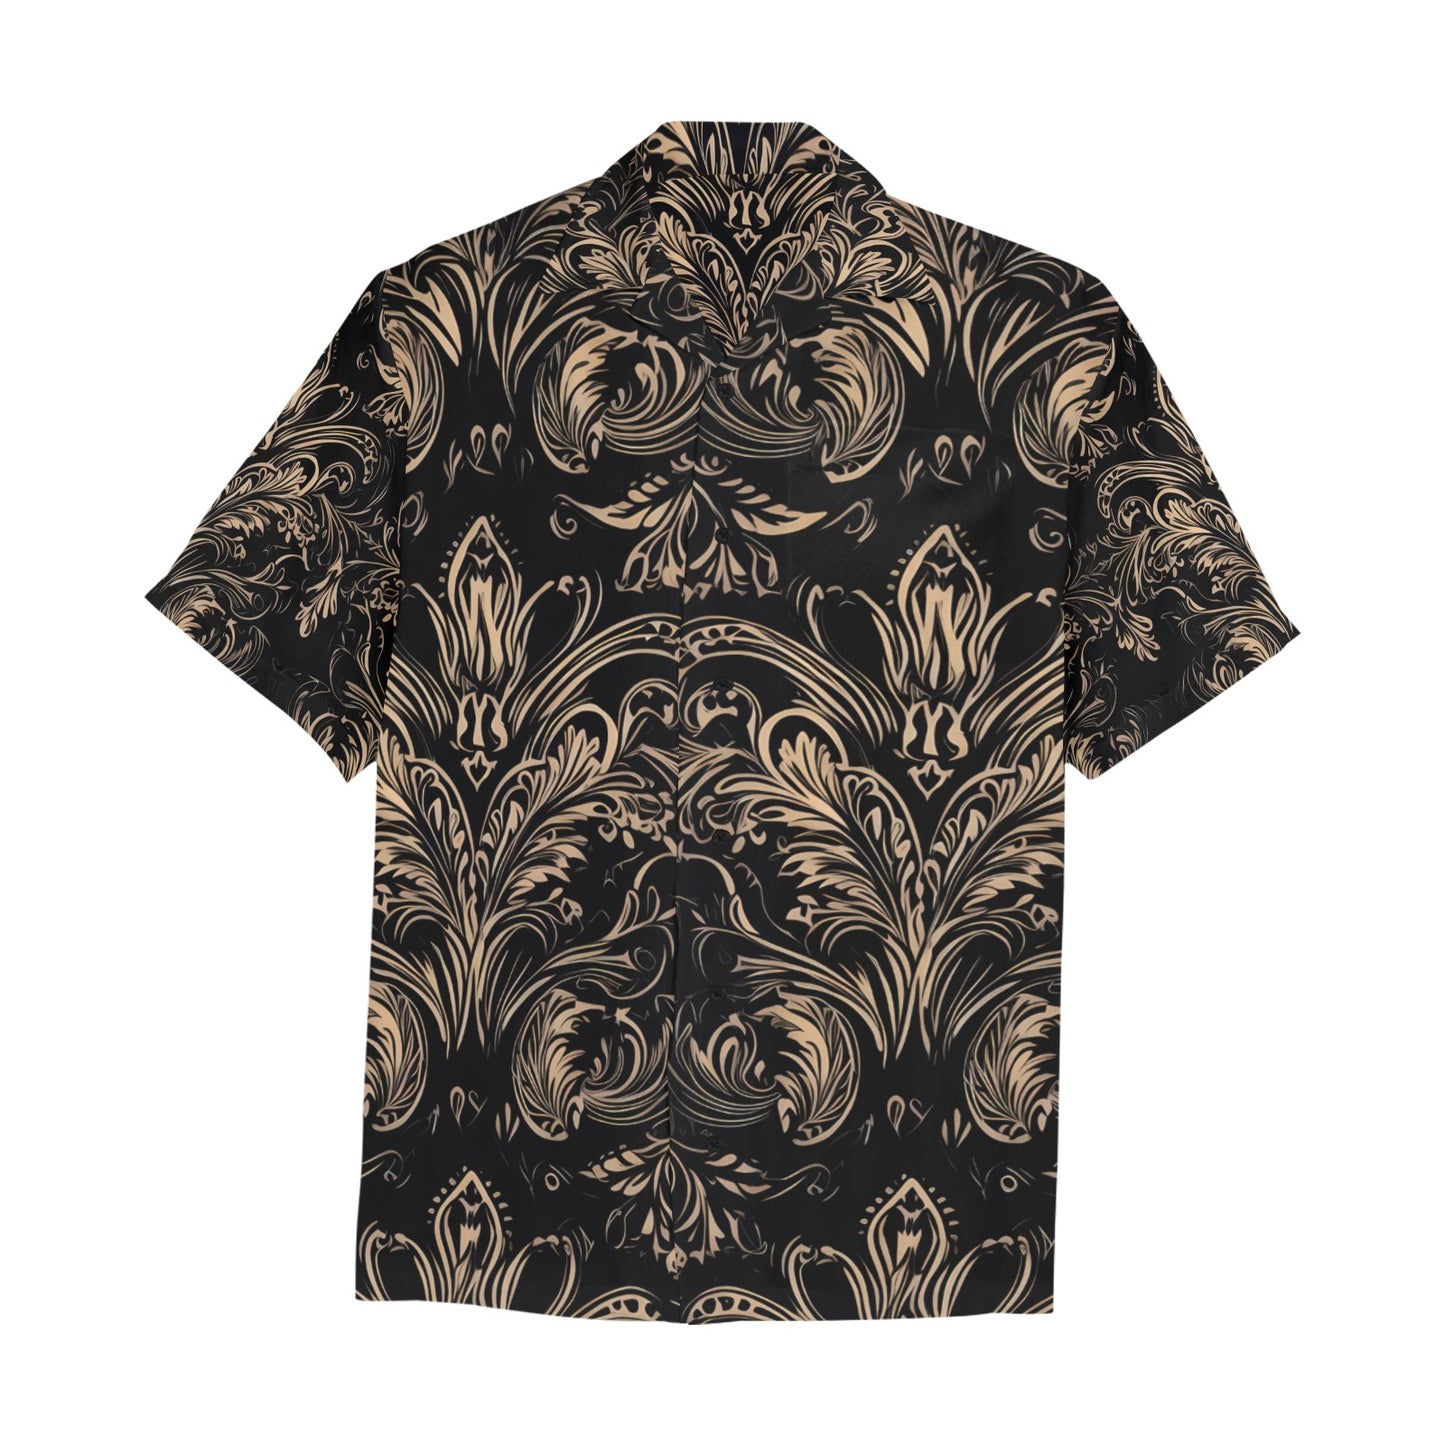 Gothic Design Hawaiian Shirt With Chest Pocket